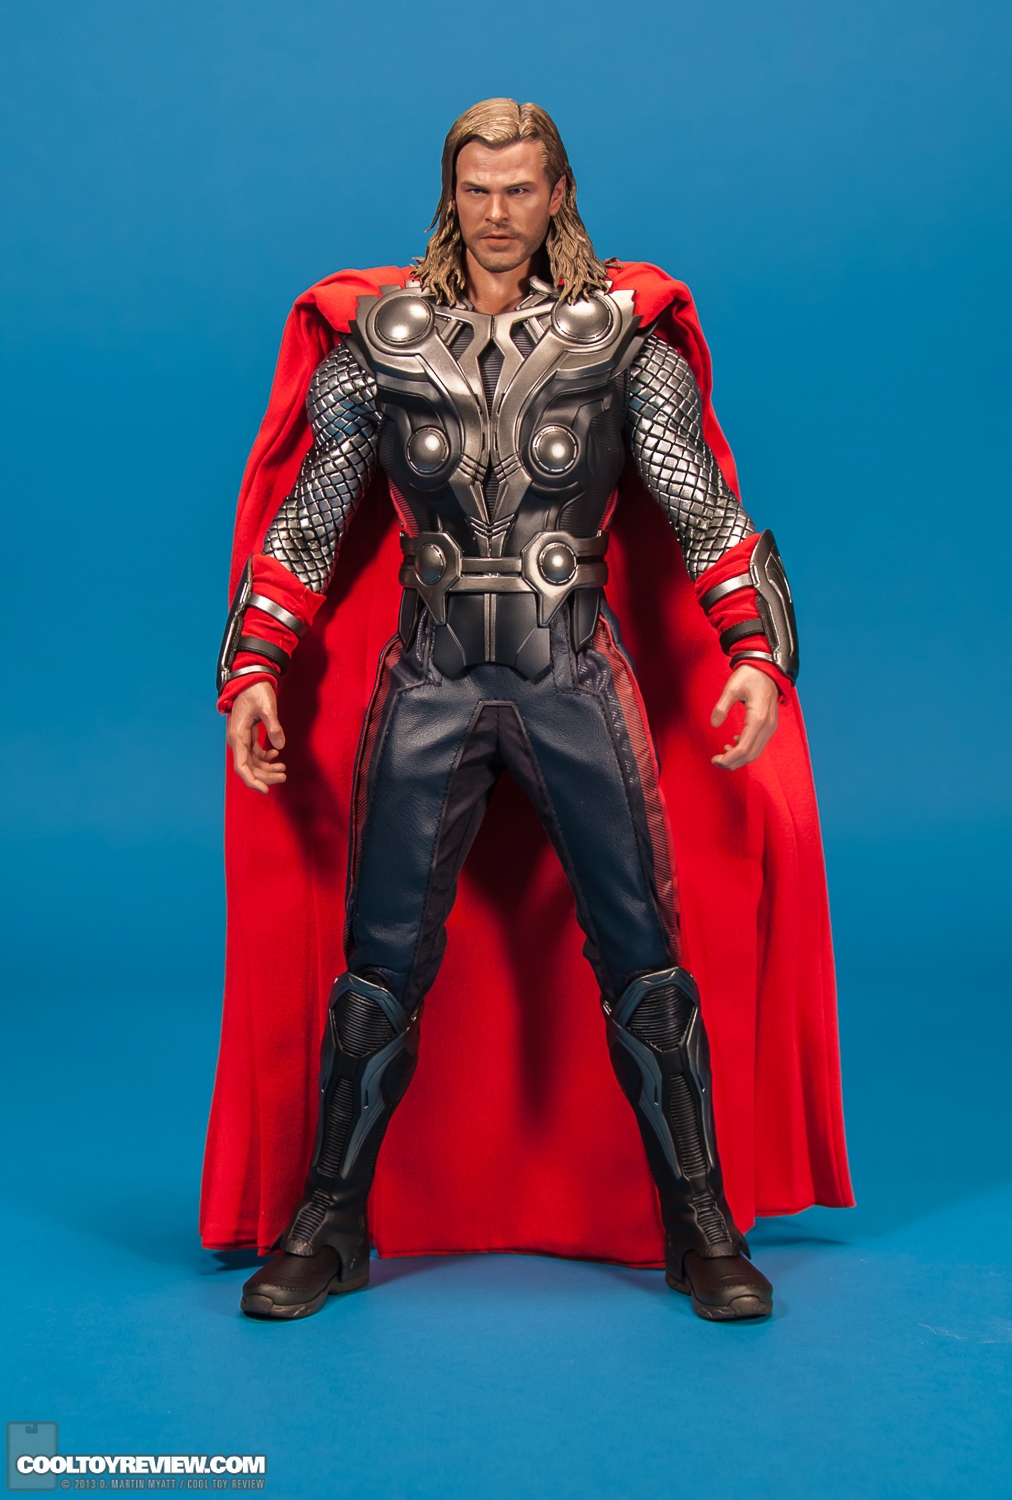 Hot_Toys_Thor_Avengers_Movie_Masterpiece_Series-07.jpg